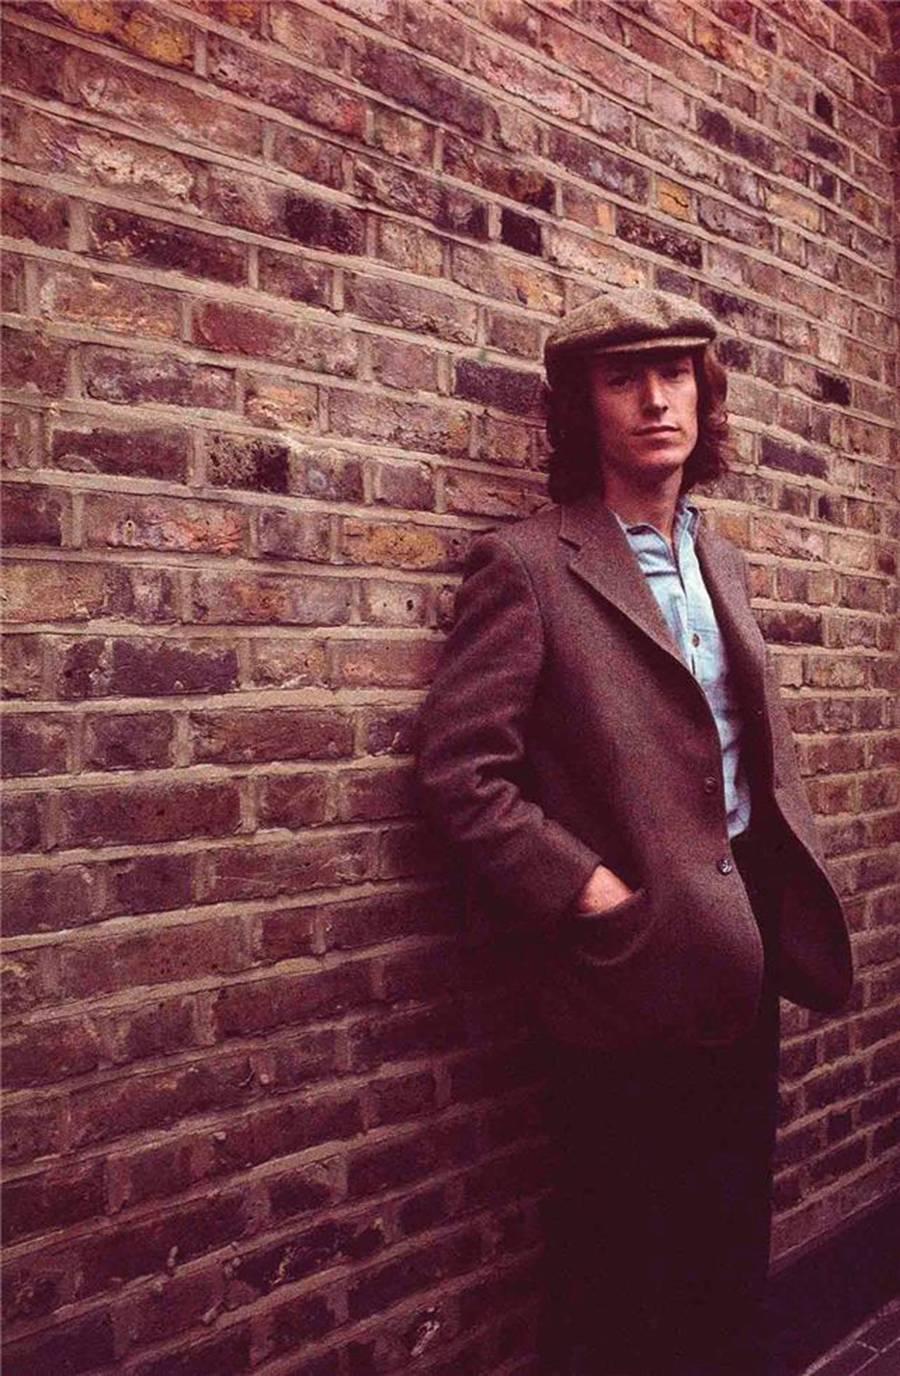 Guido Harari Portrait Photograph – Steve Winwood, London, 1976